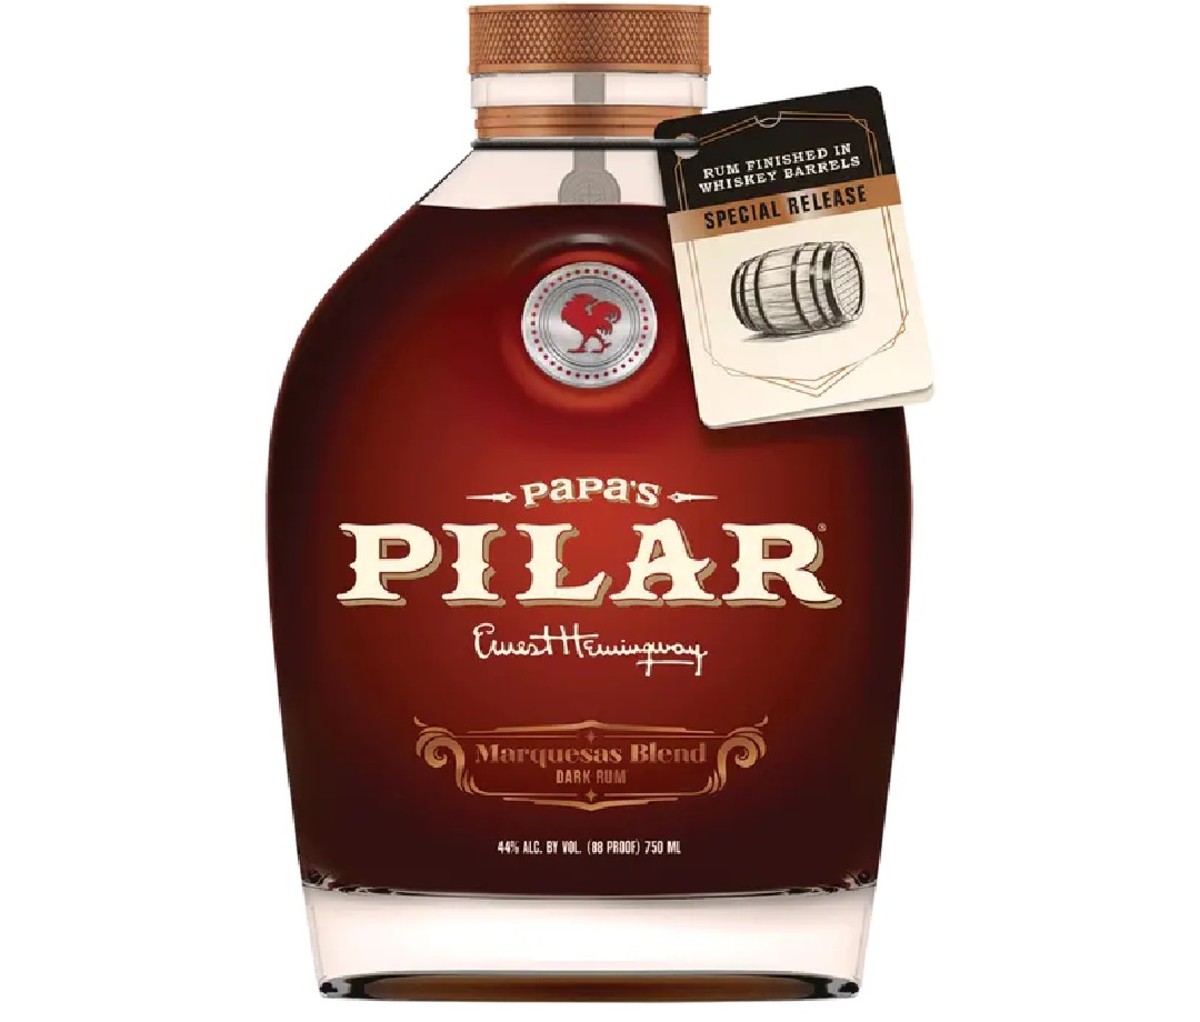 Bottle of Papa’s Pilar Dark Rum